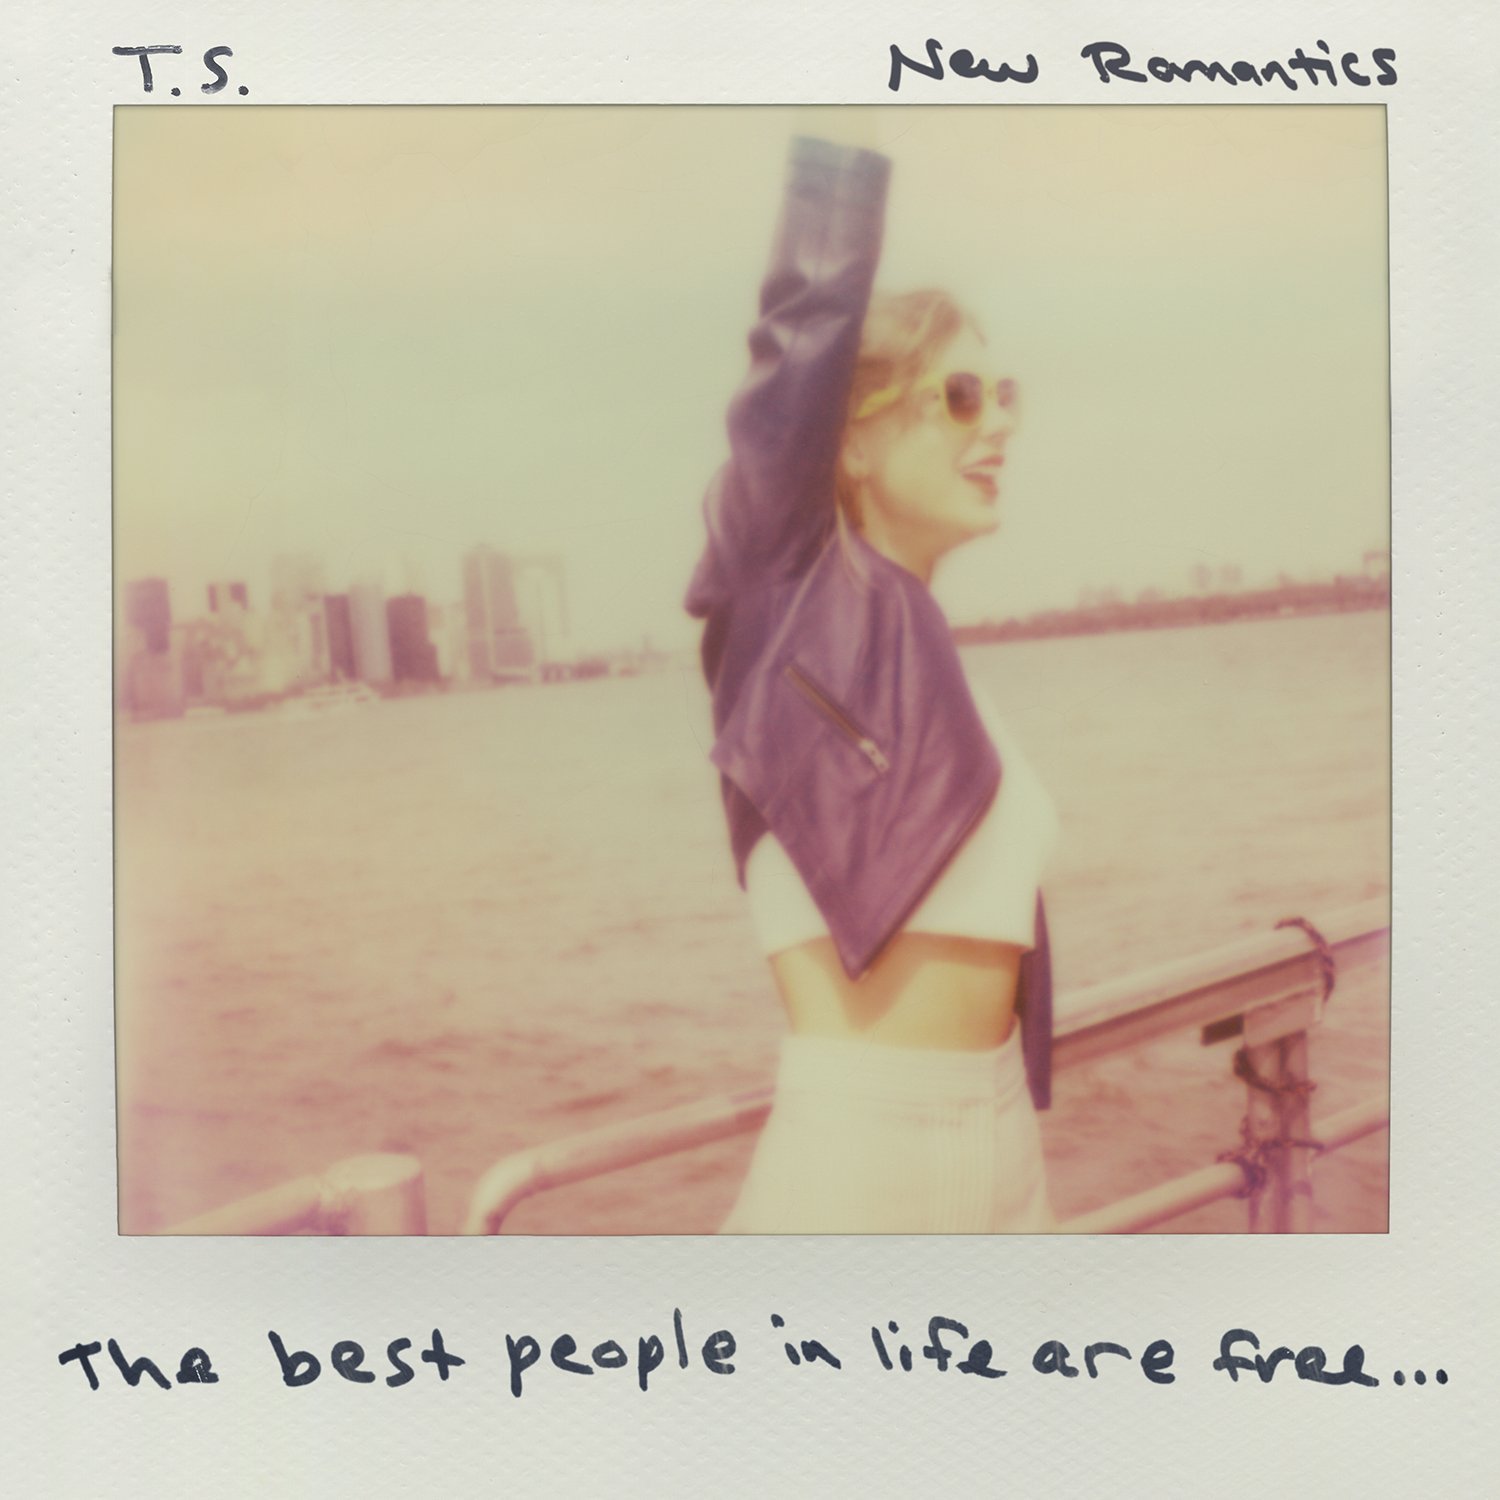 New Romantics by Taylor Swift (1989)